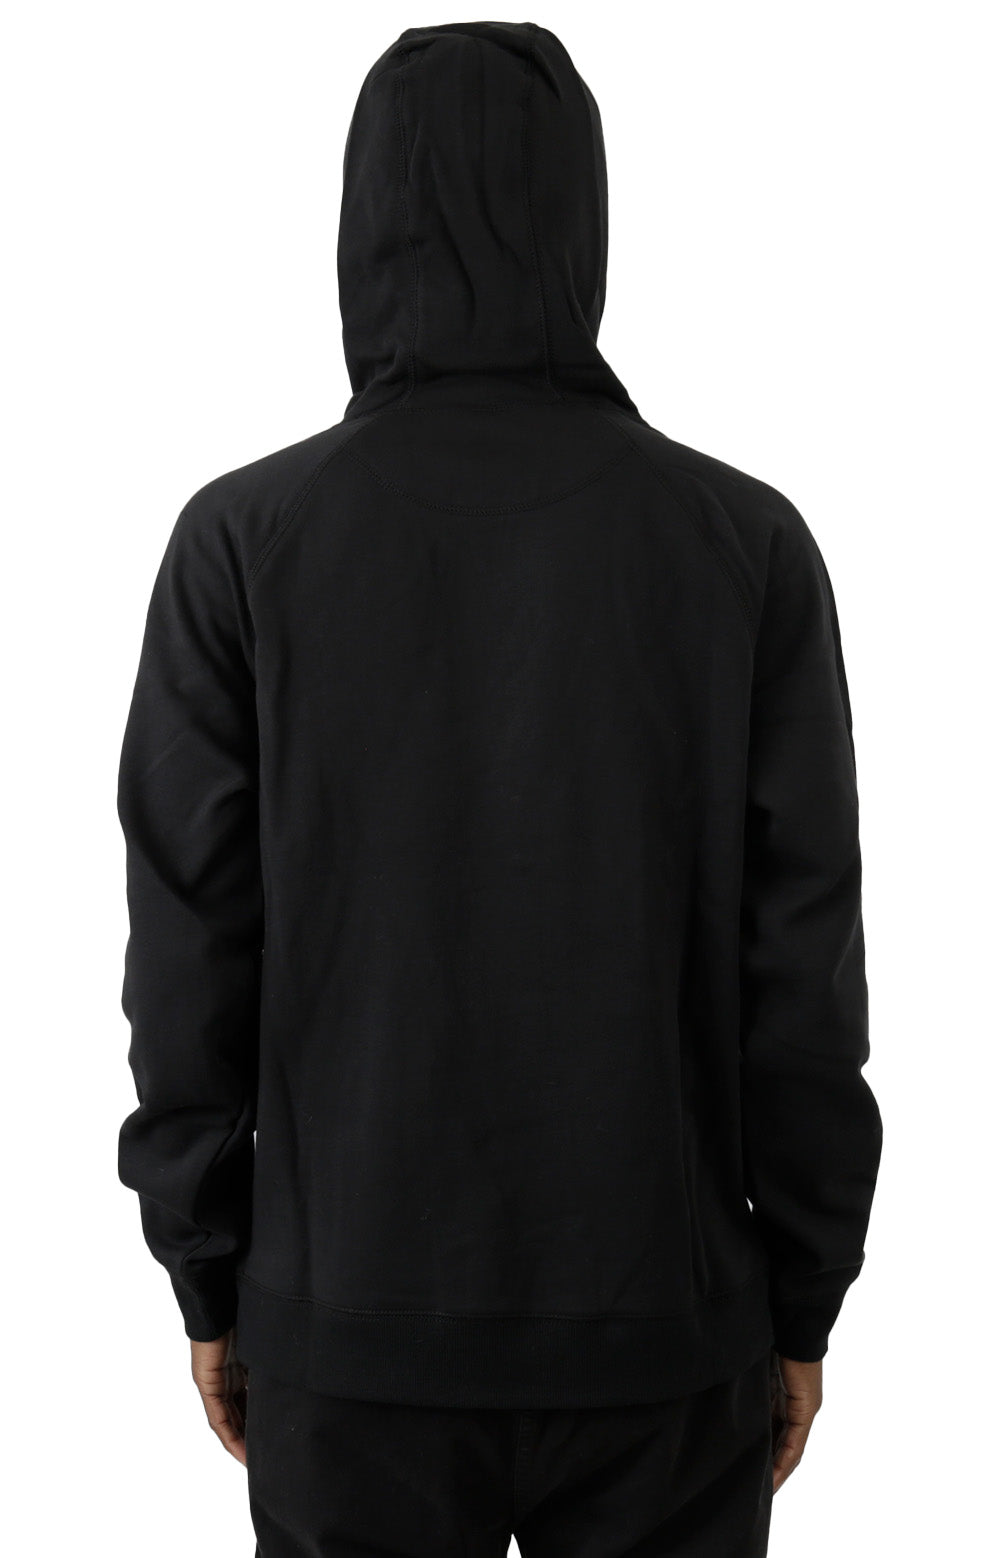 Versa Standard Pullover Hoodie - Black/OTW Patch